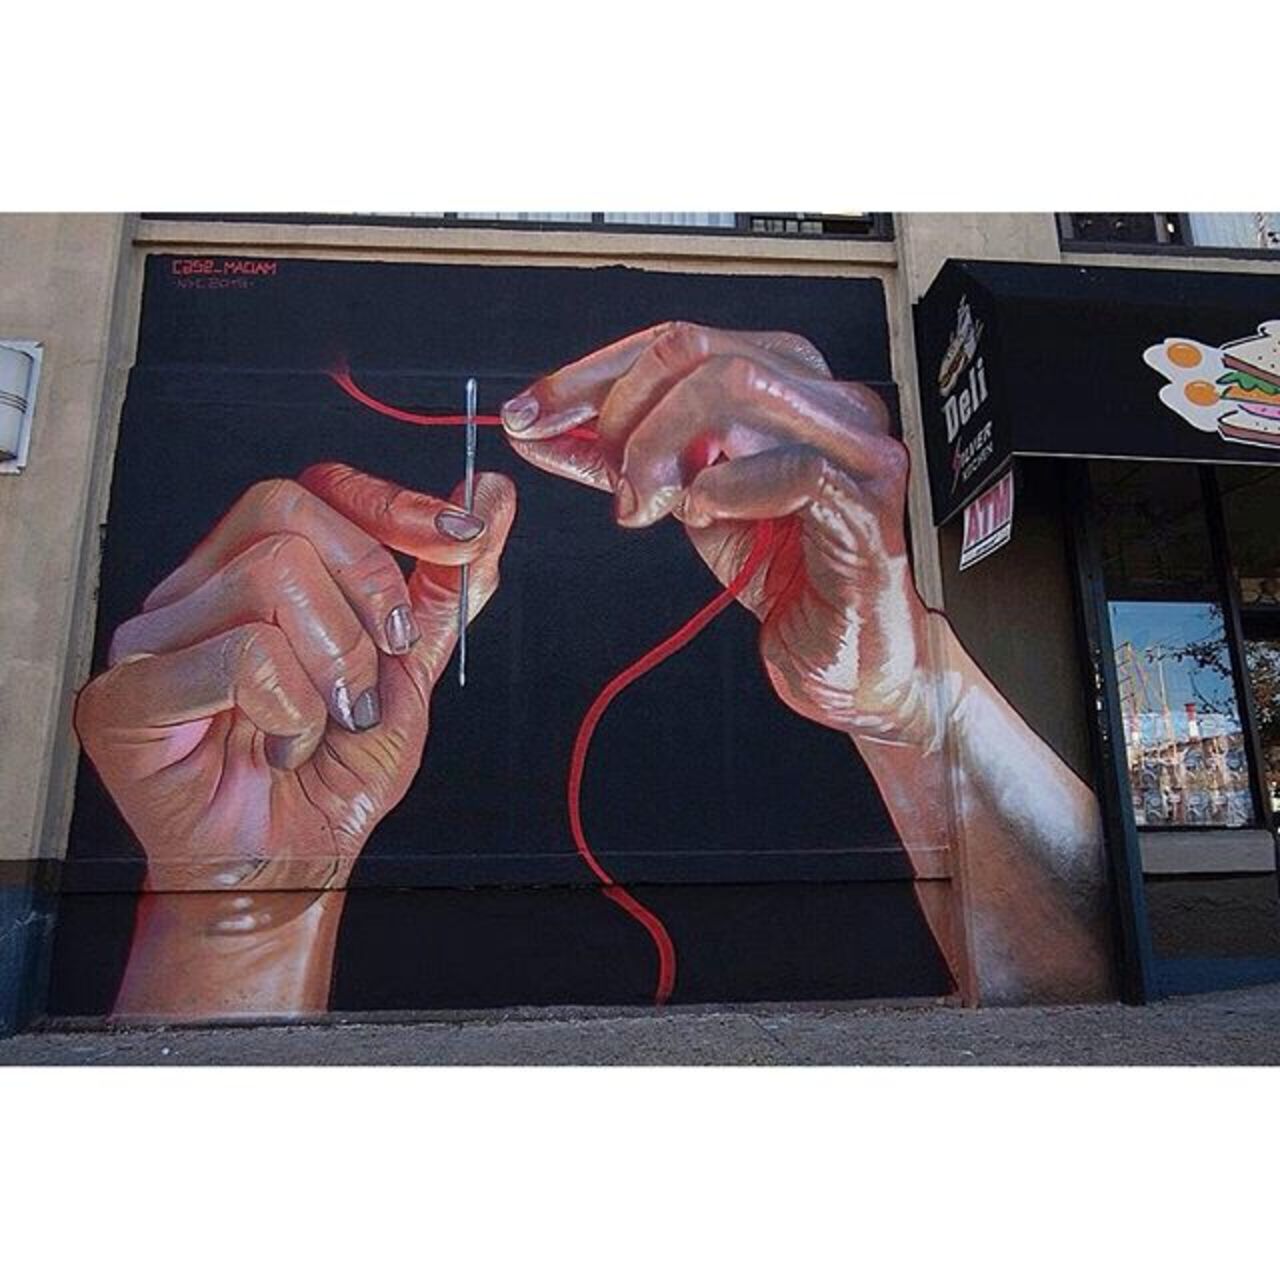 RT cakozlem76: Case #streetart #urbanart #graffiti https://t.co/pojNMfXWLy https://goo.gl/t4fpx2